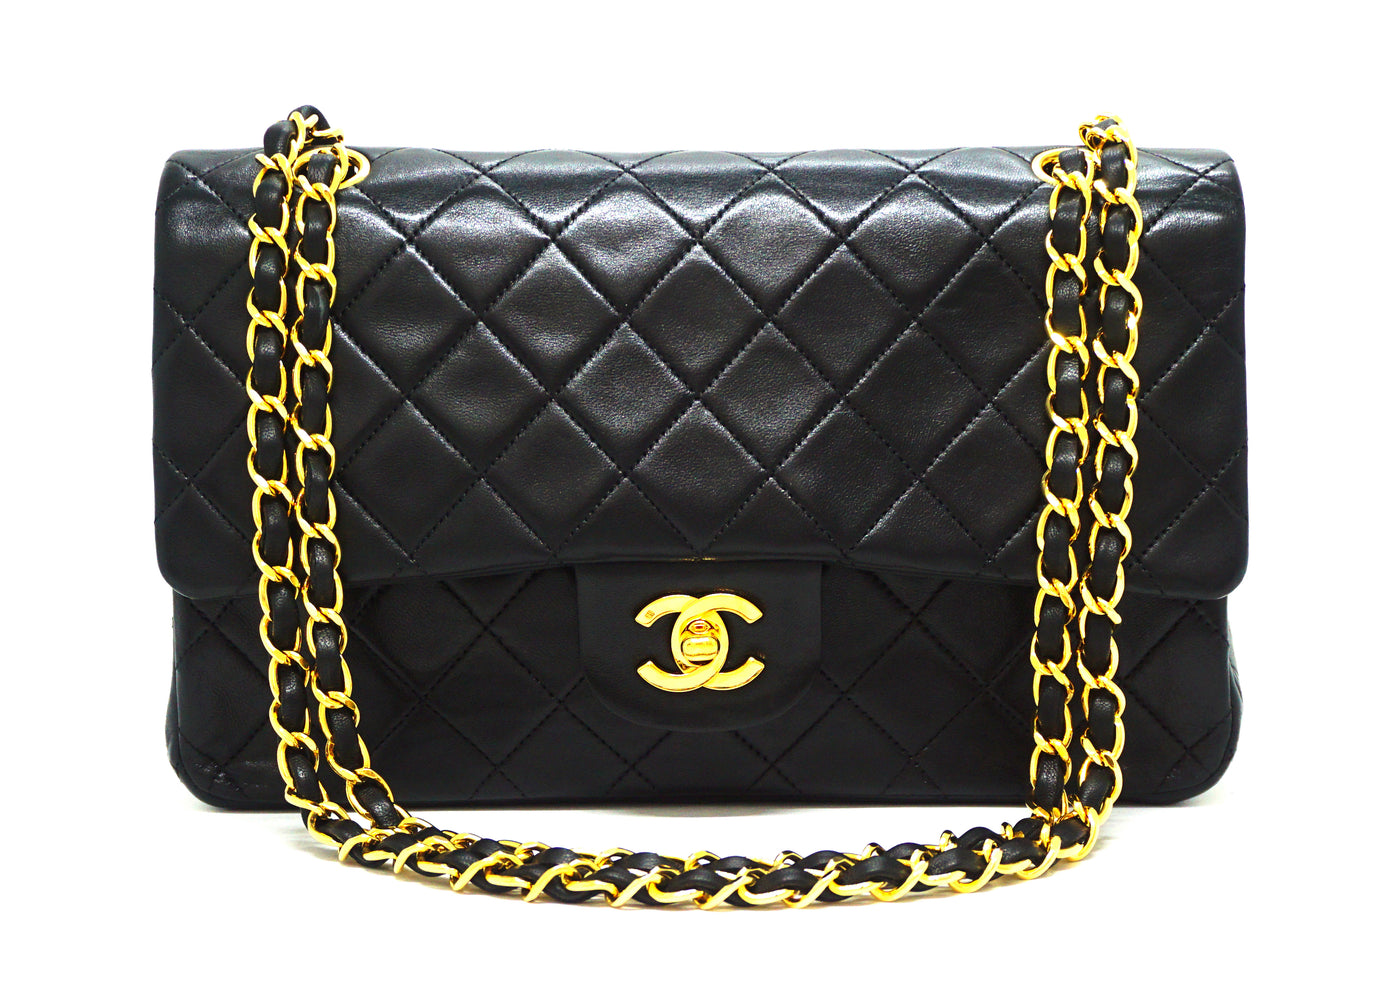 Chanel Classic Double Flap Bag, Black Lambskin, Medium